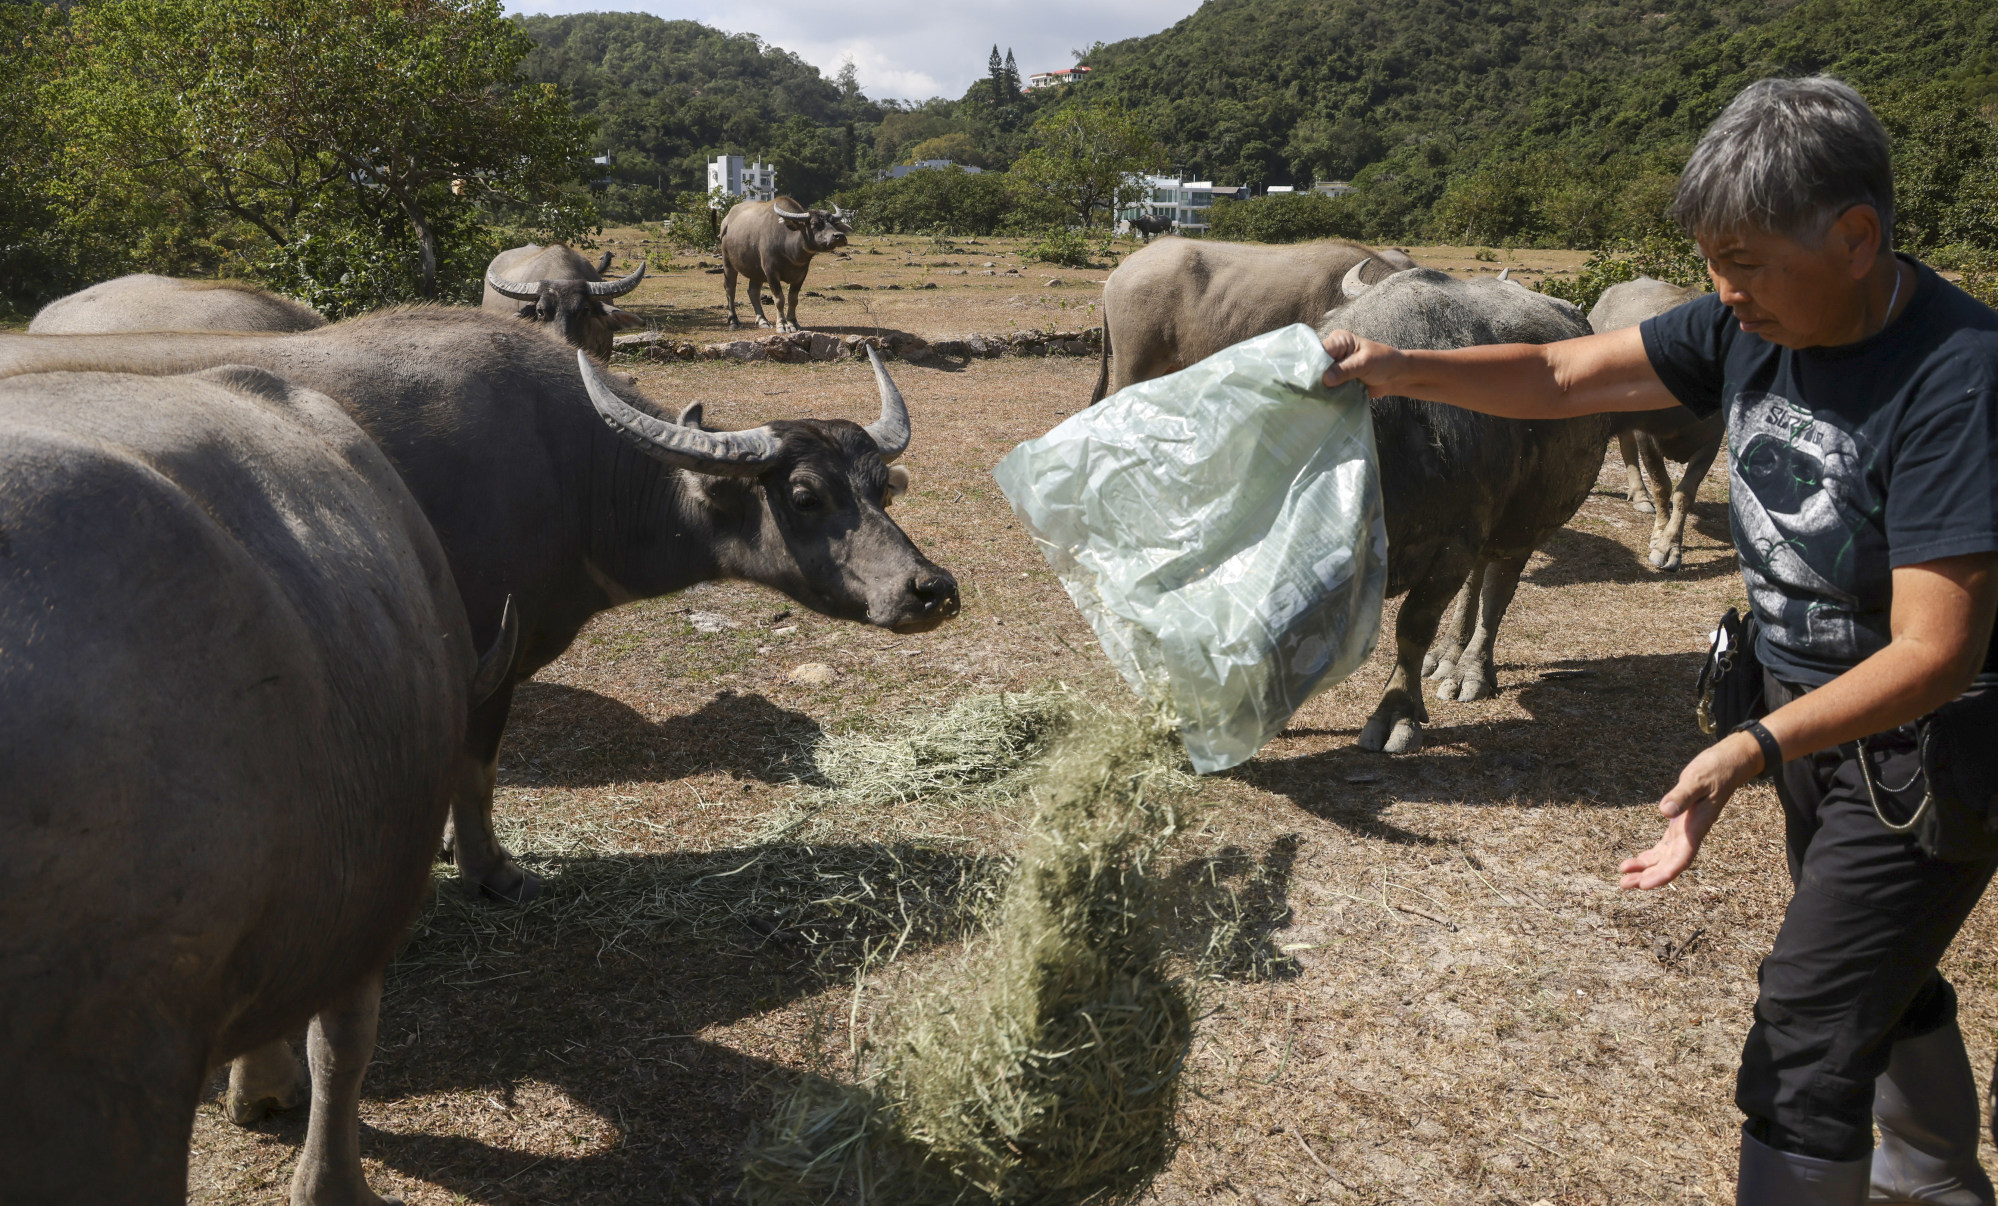 population control or wipeout? hong kong ‘buffalo mama’ worries for lantau island cows, wants sterilisation stopped